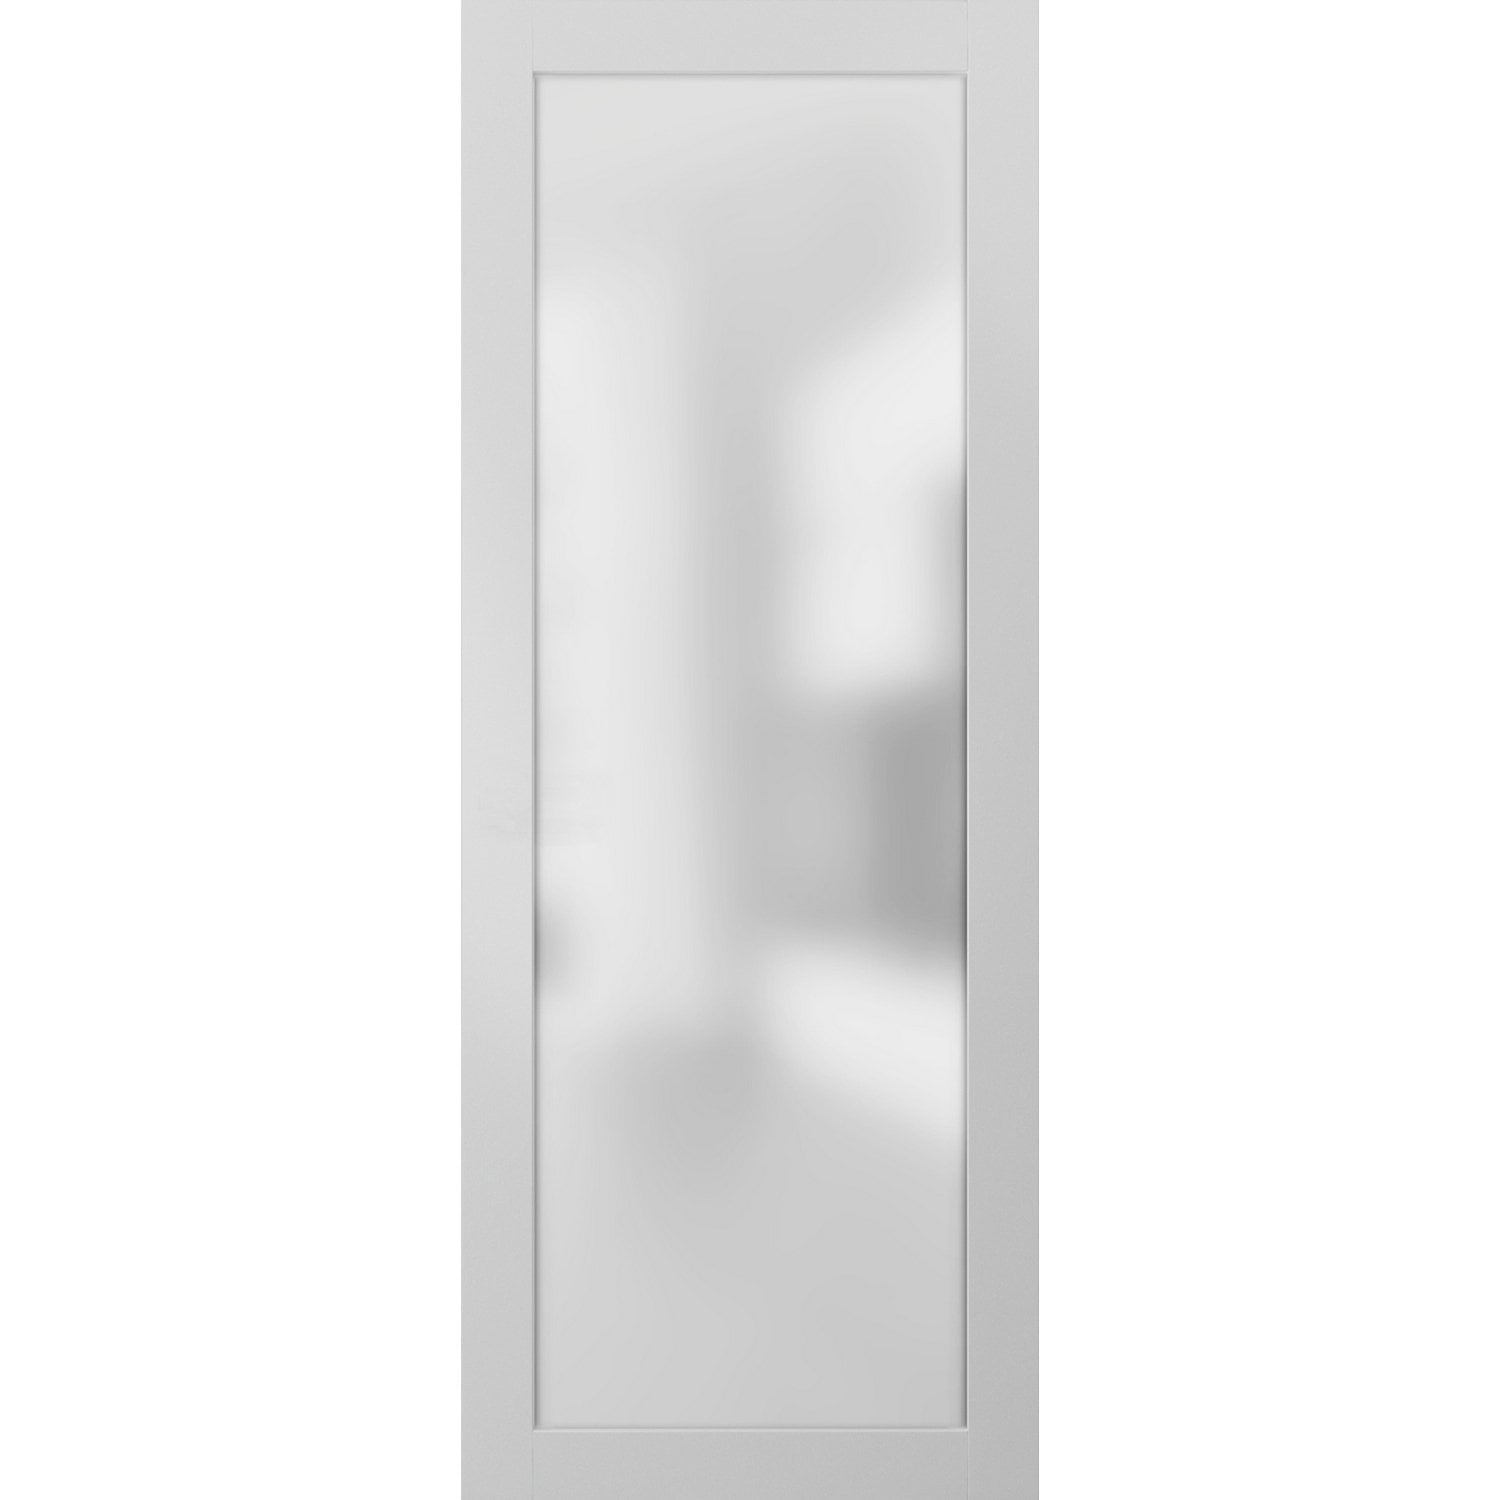 Opaque Glass Door Panel Slab 24 X 96 Planum 2102 White Silk Use As Barn Pocket Sliding Closet Solid Wood Core Interior Door Walmart Com Walmart Com